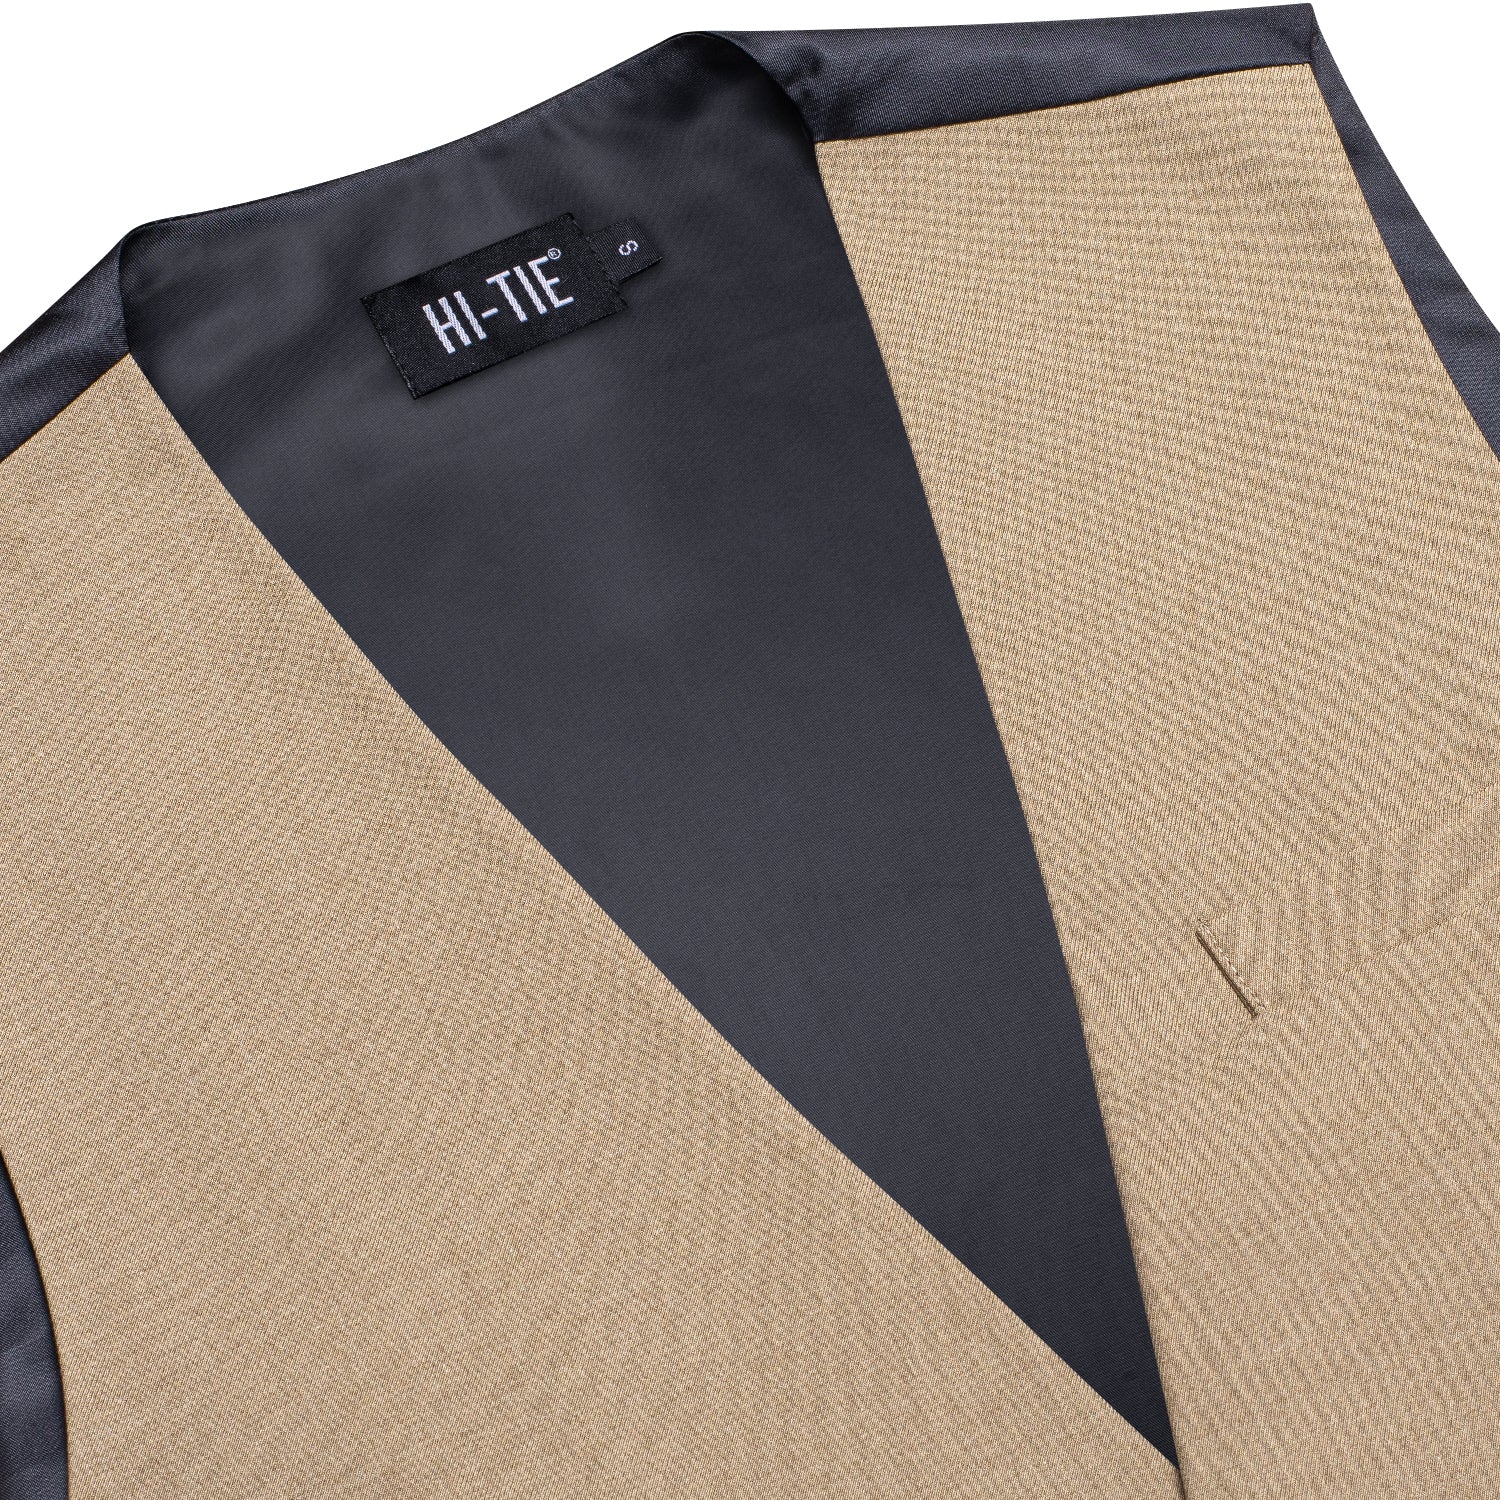 New Champagne Solid Silk Men's Single Vest Waistcoat